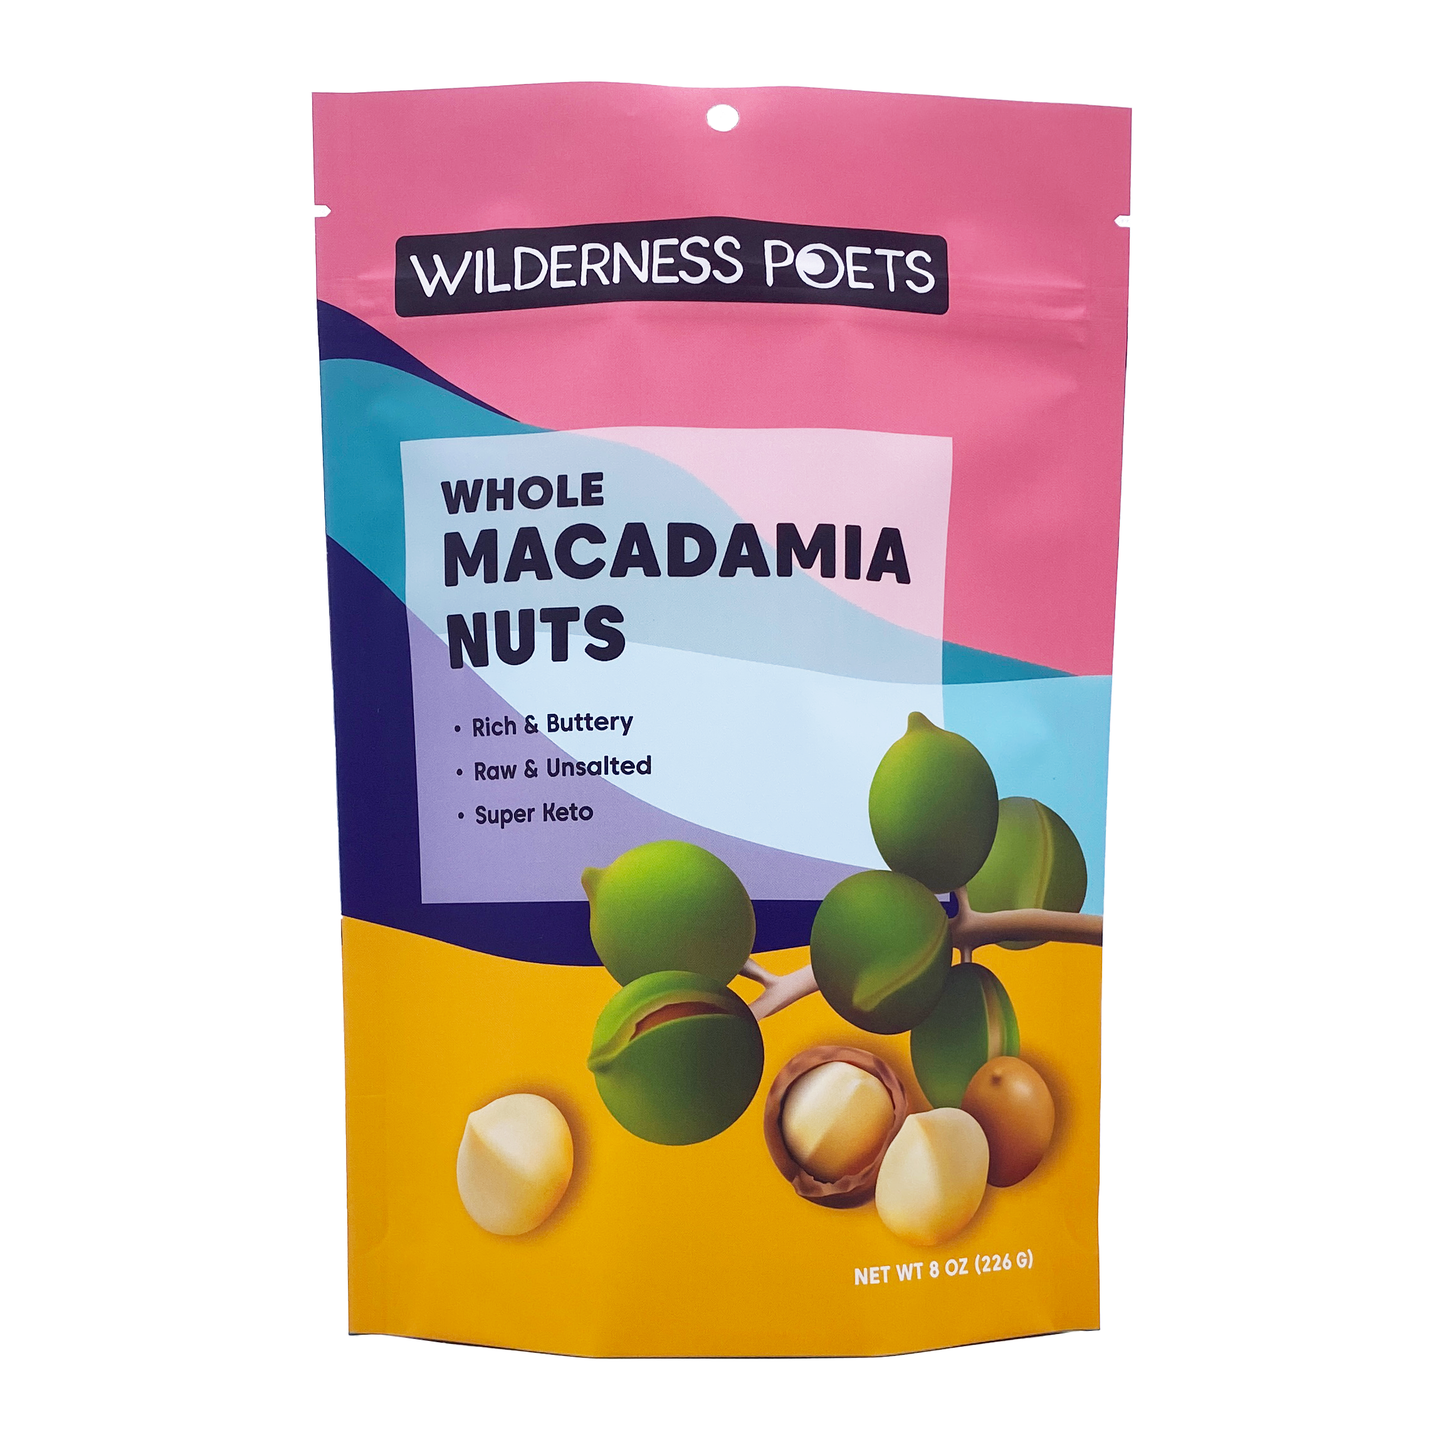 Macadamia Nuts - Whole, Raw